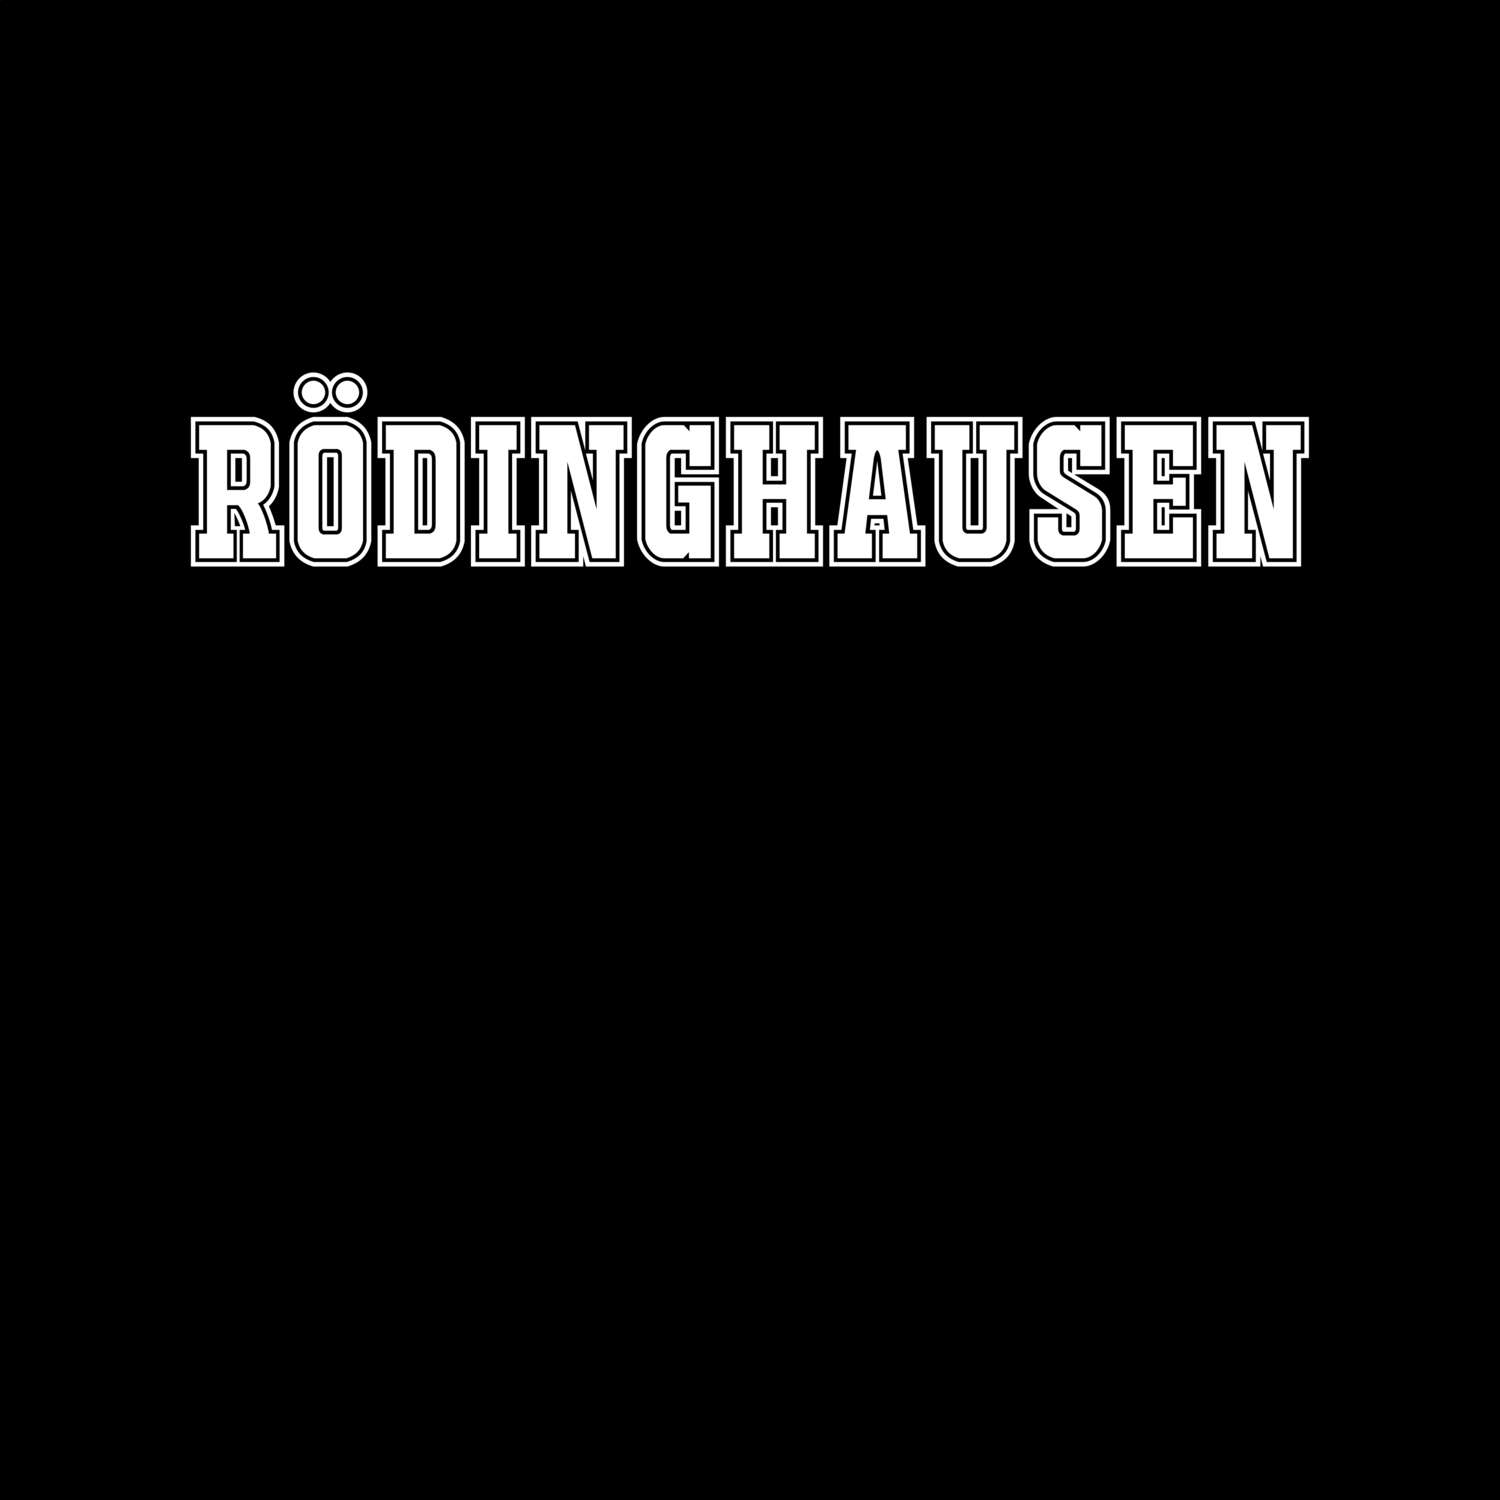 Rödinghausen T-Shirt »Classic«